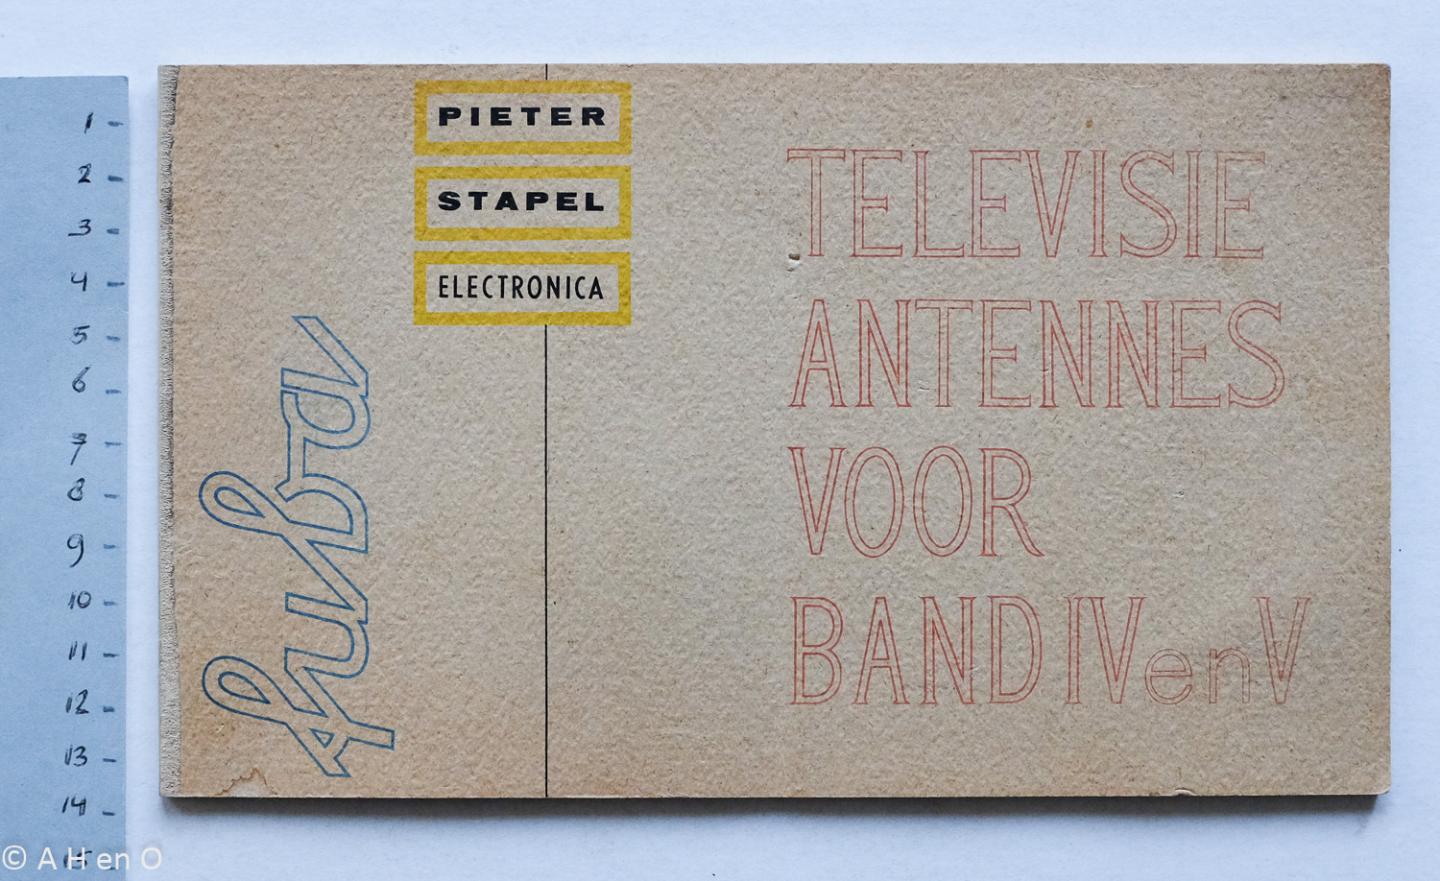 Funktechnische Bauteile (FUBA) Hannover - Televisie antennes voor Band IV en V